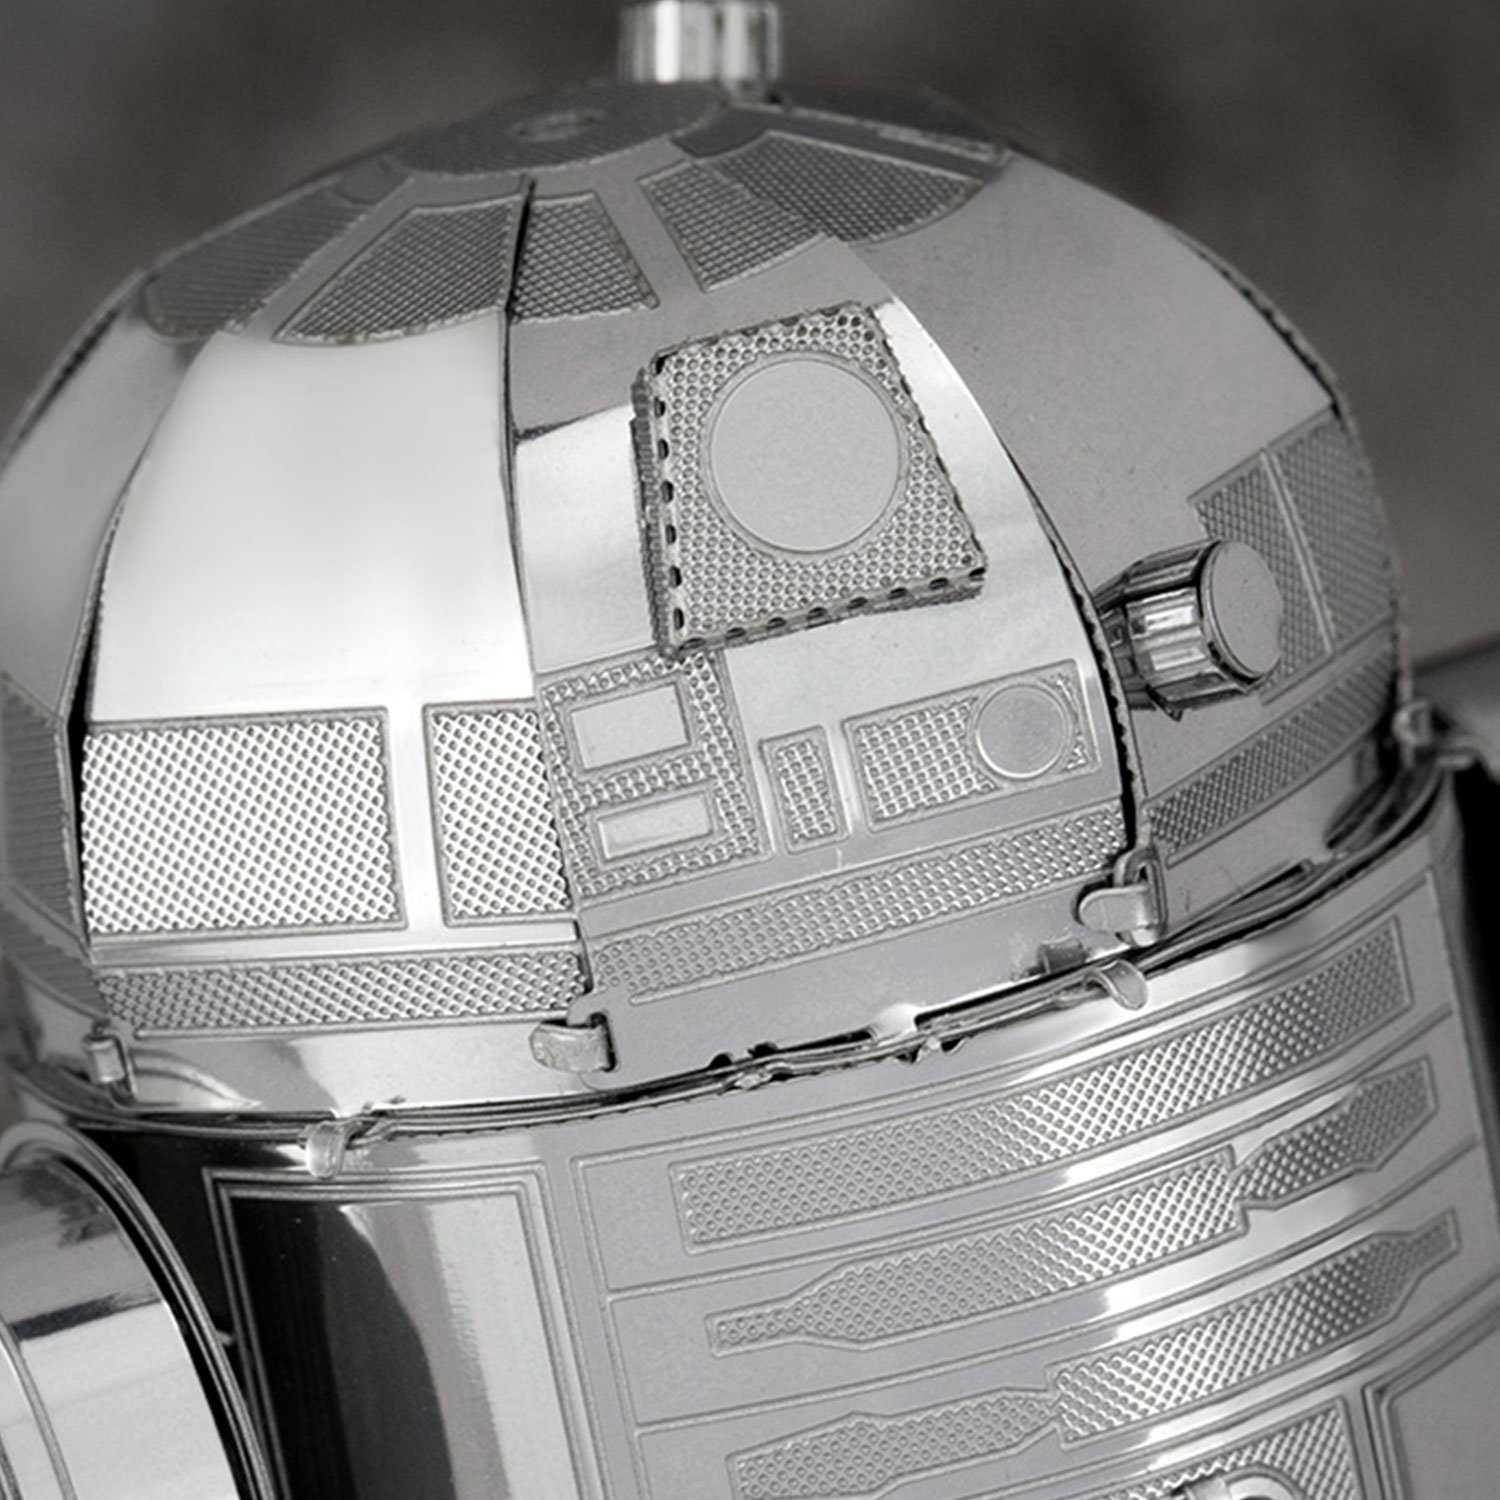 3D-Puzzle WARS R2-D2, METAL Metal EARTH 3D-Bausatz Earth® STAR Puzzleteile